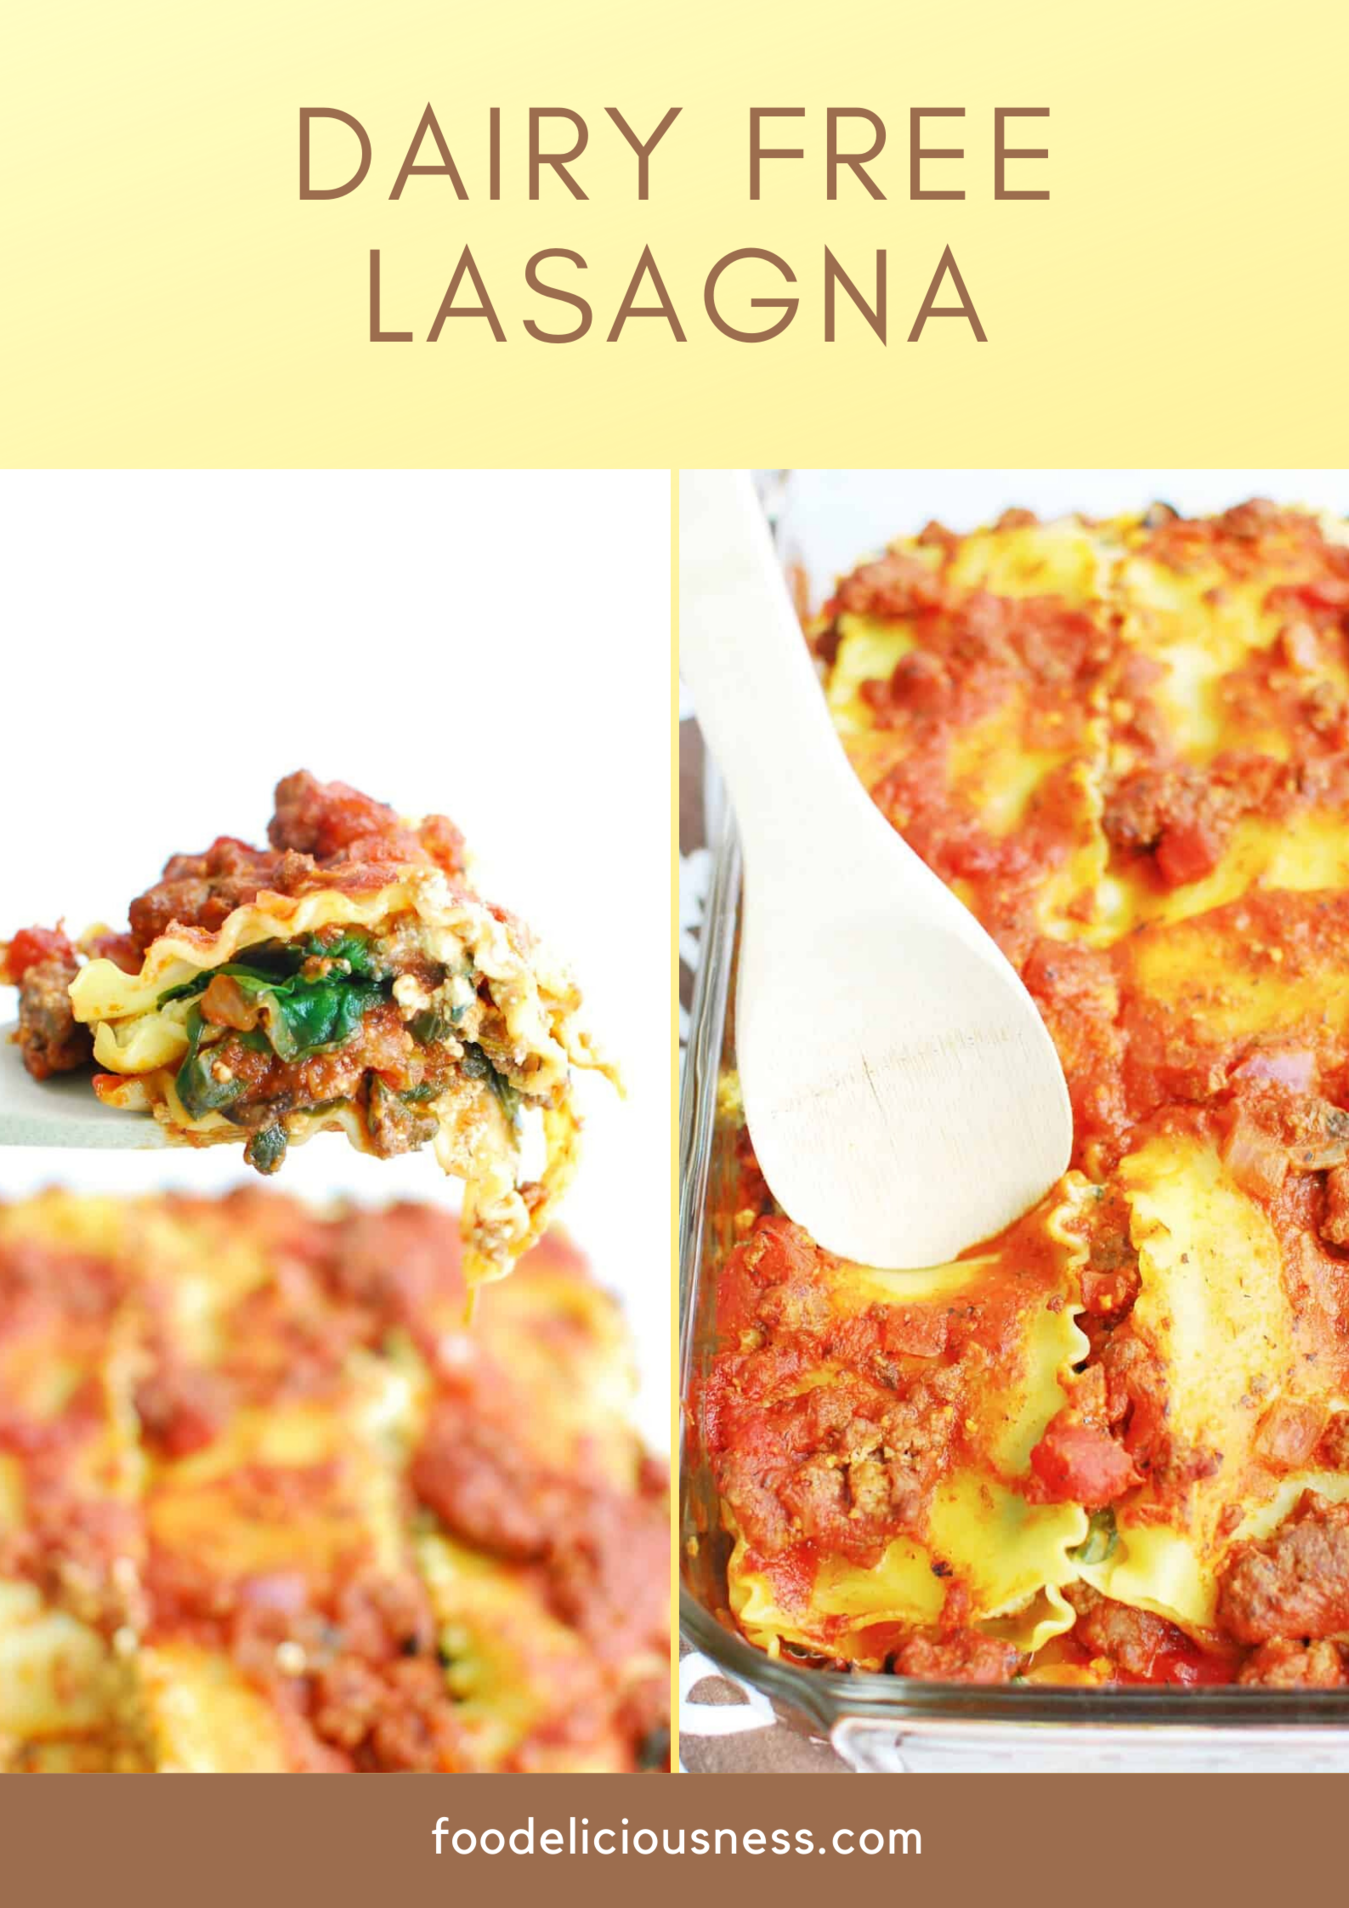 Dairy free lasagna 2